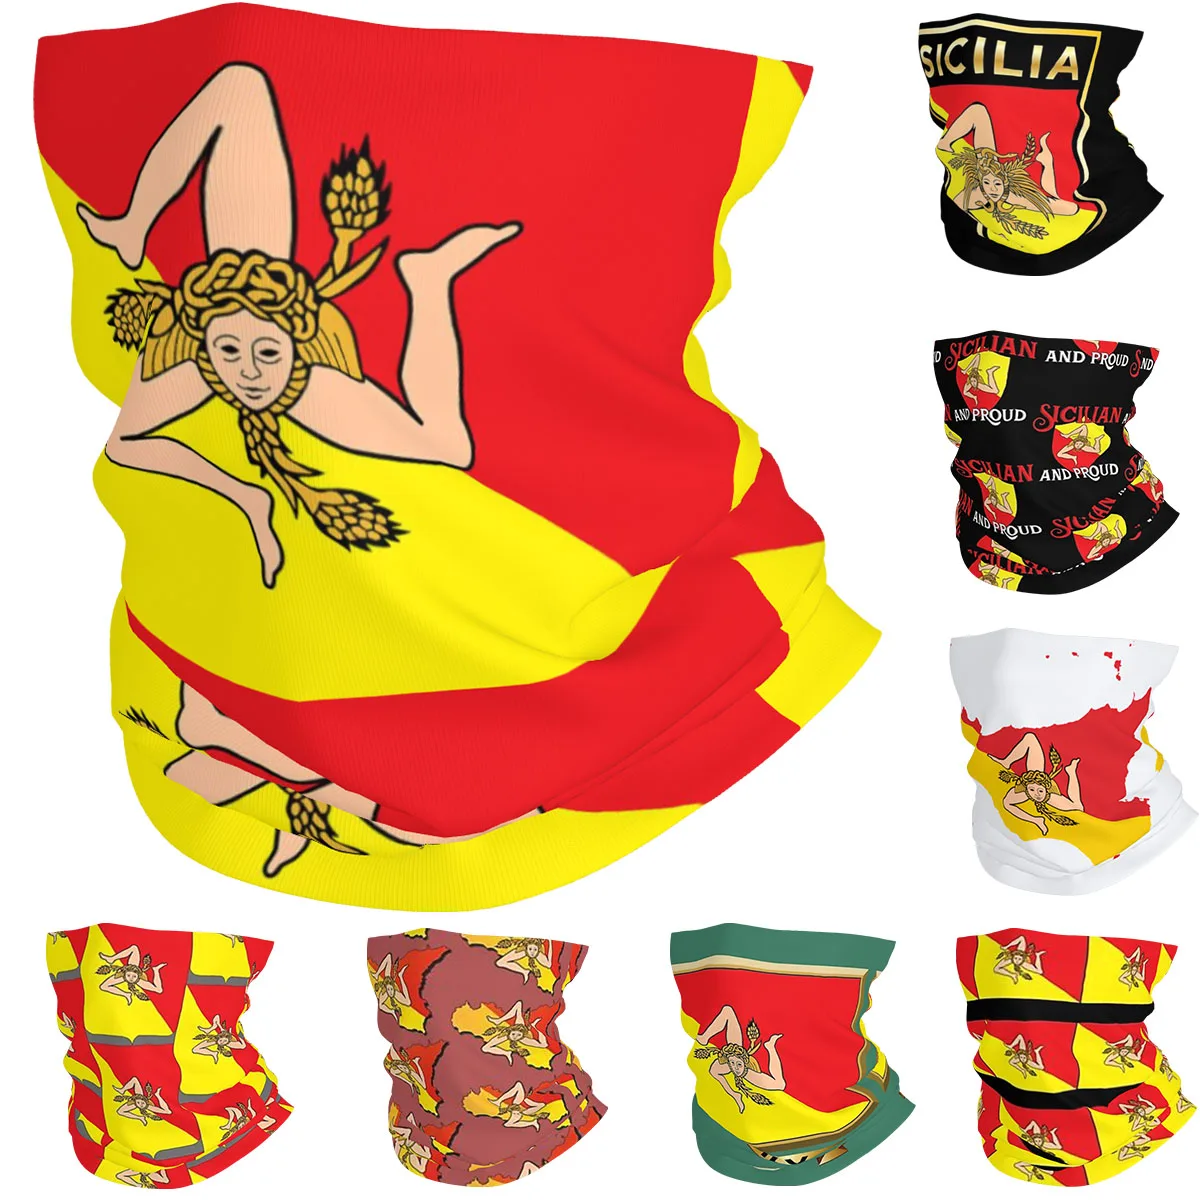 

Italy Of The Sicily Flag Bandana Neck Cover Printed Sicilia Flag Wrap Scarf Balaclava Outdoor Sports Unisex Adult Windproof